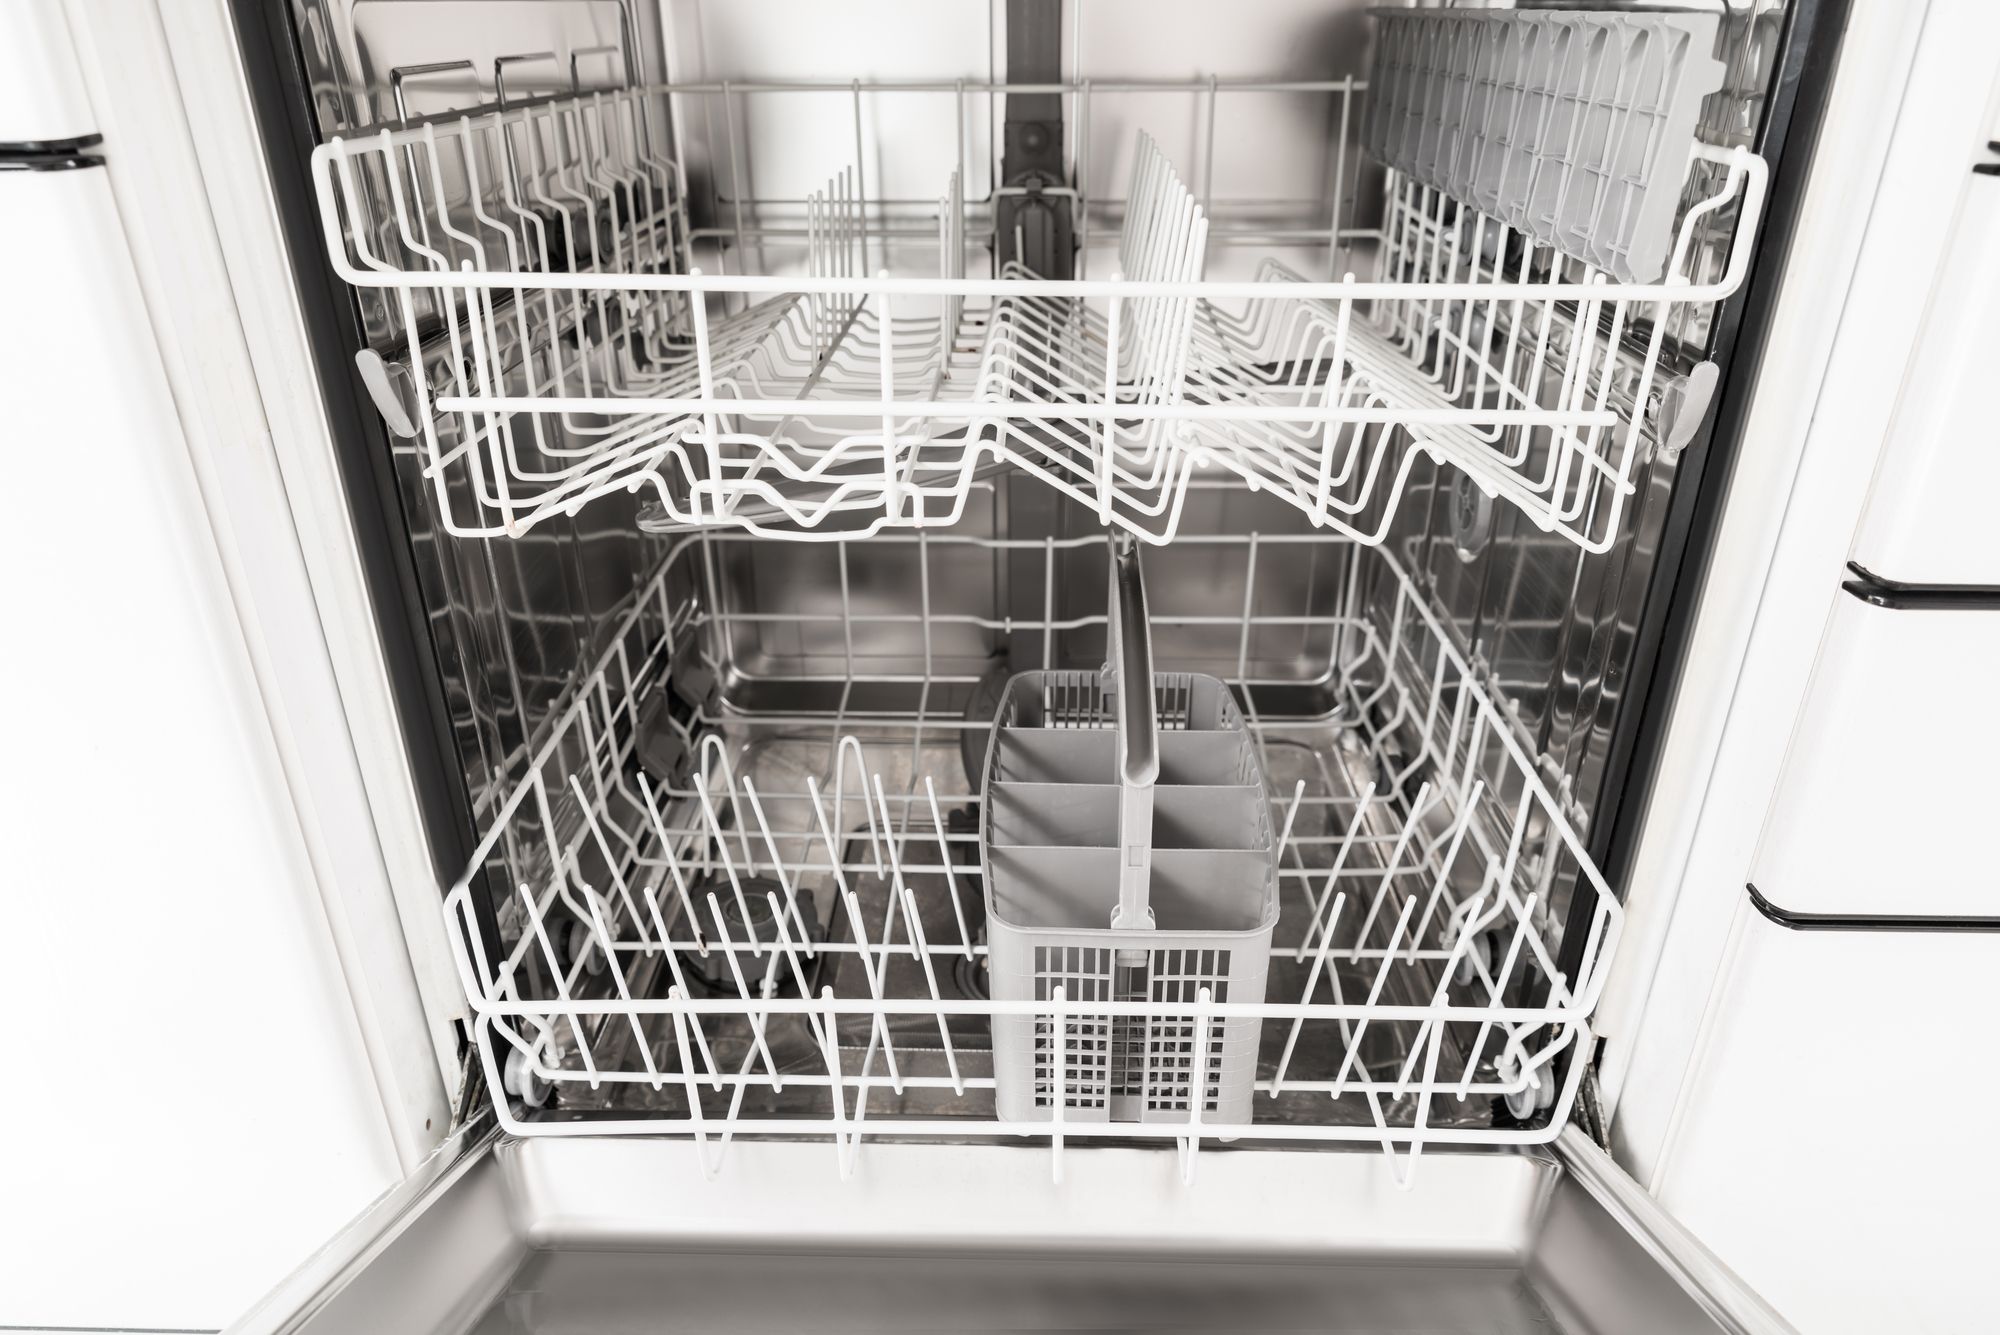 Close-up Photo Of An Empty Opened Dishwasher